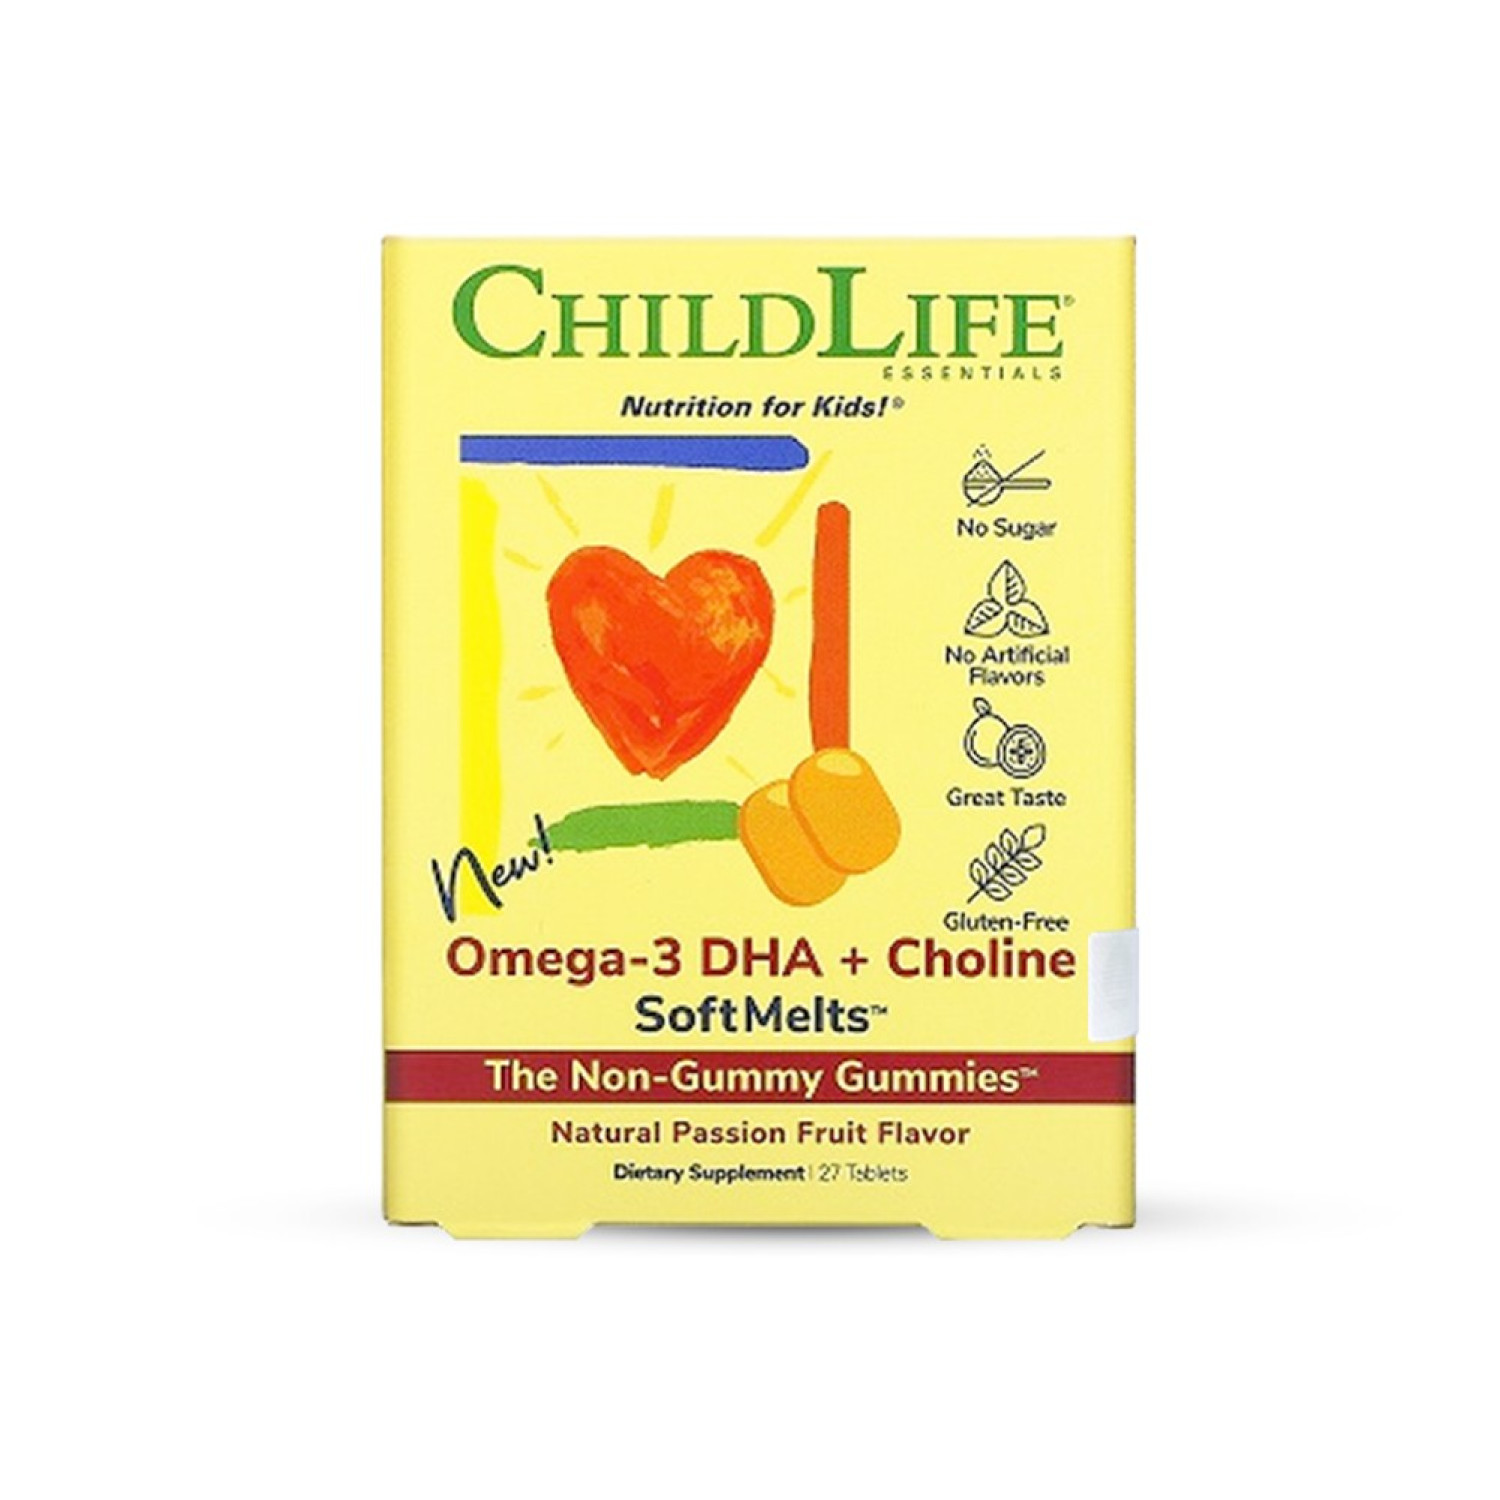 childlife-omega-3-dhacholine-gummies-27-tab-exp-date-8-24-654321fb0a812.jpeg